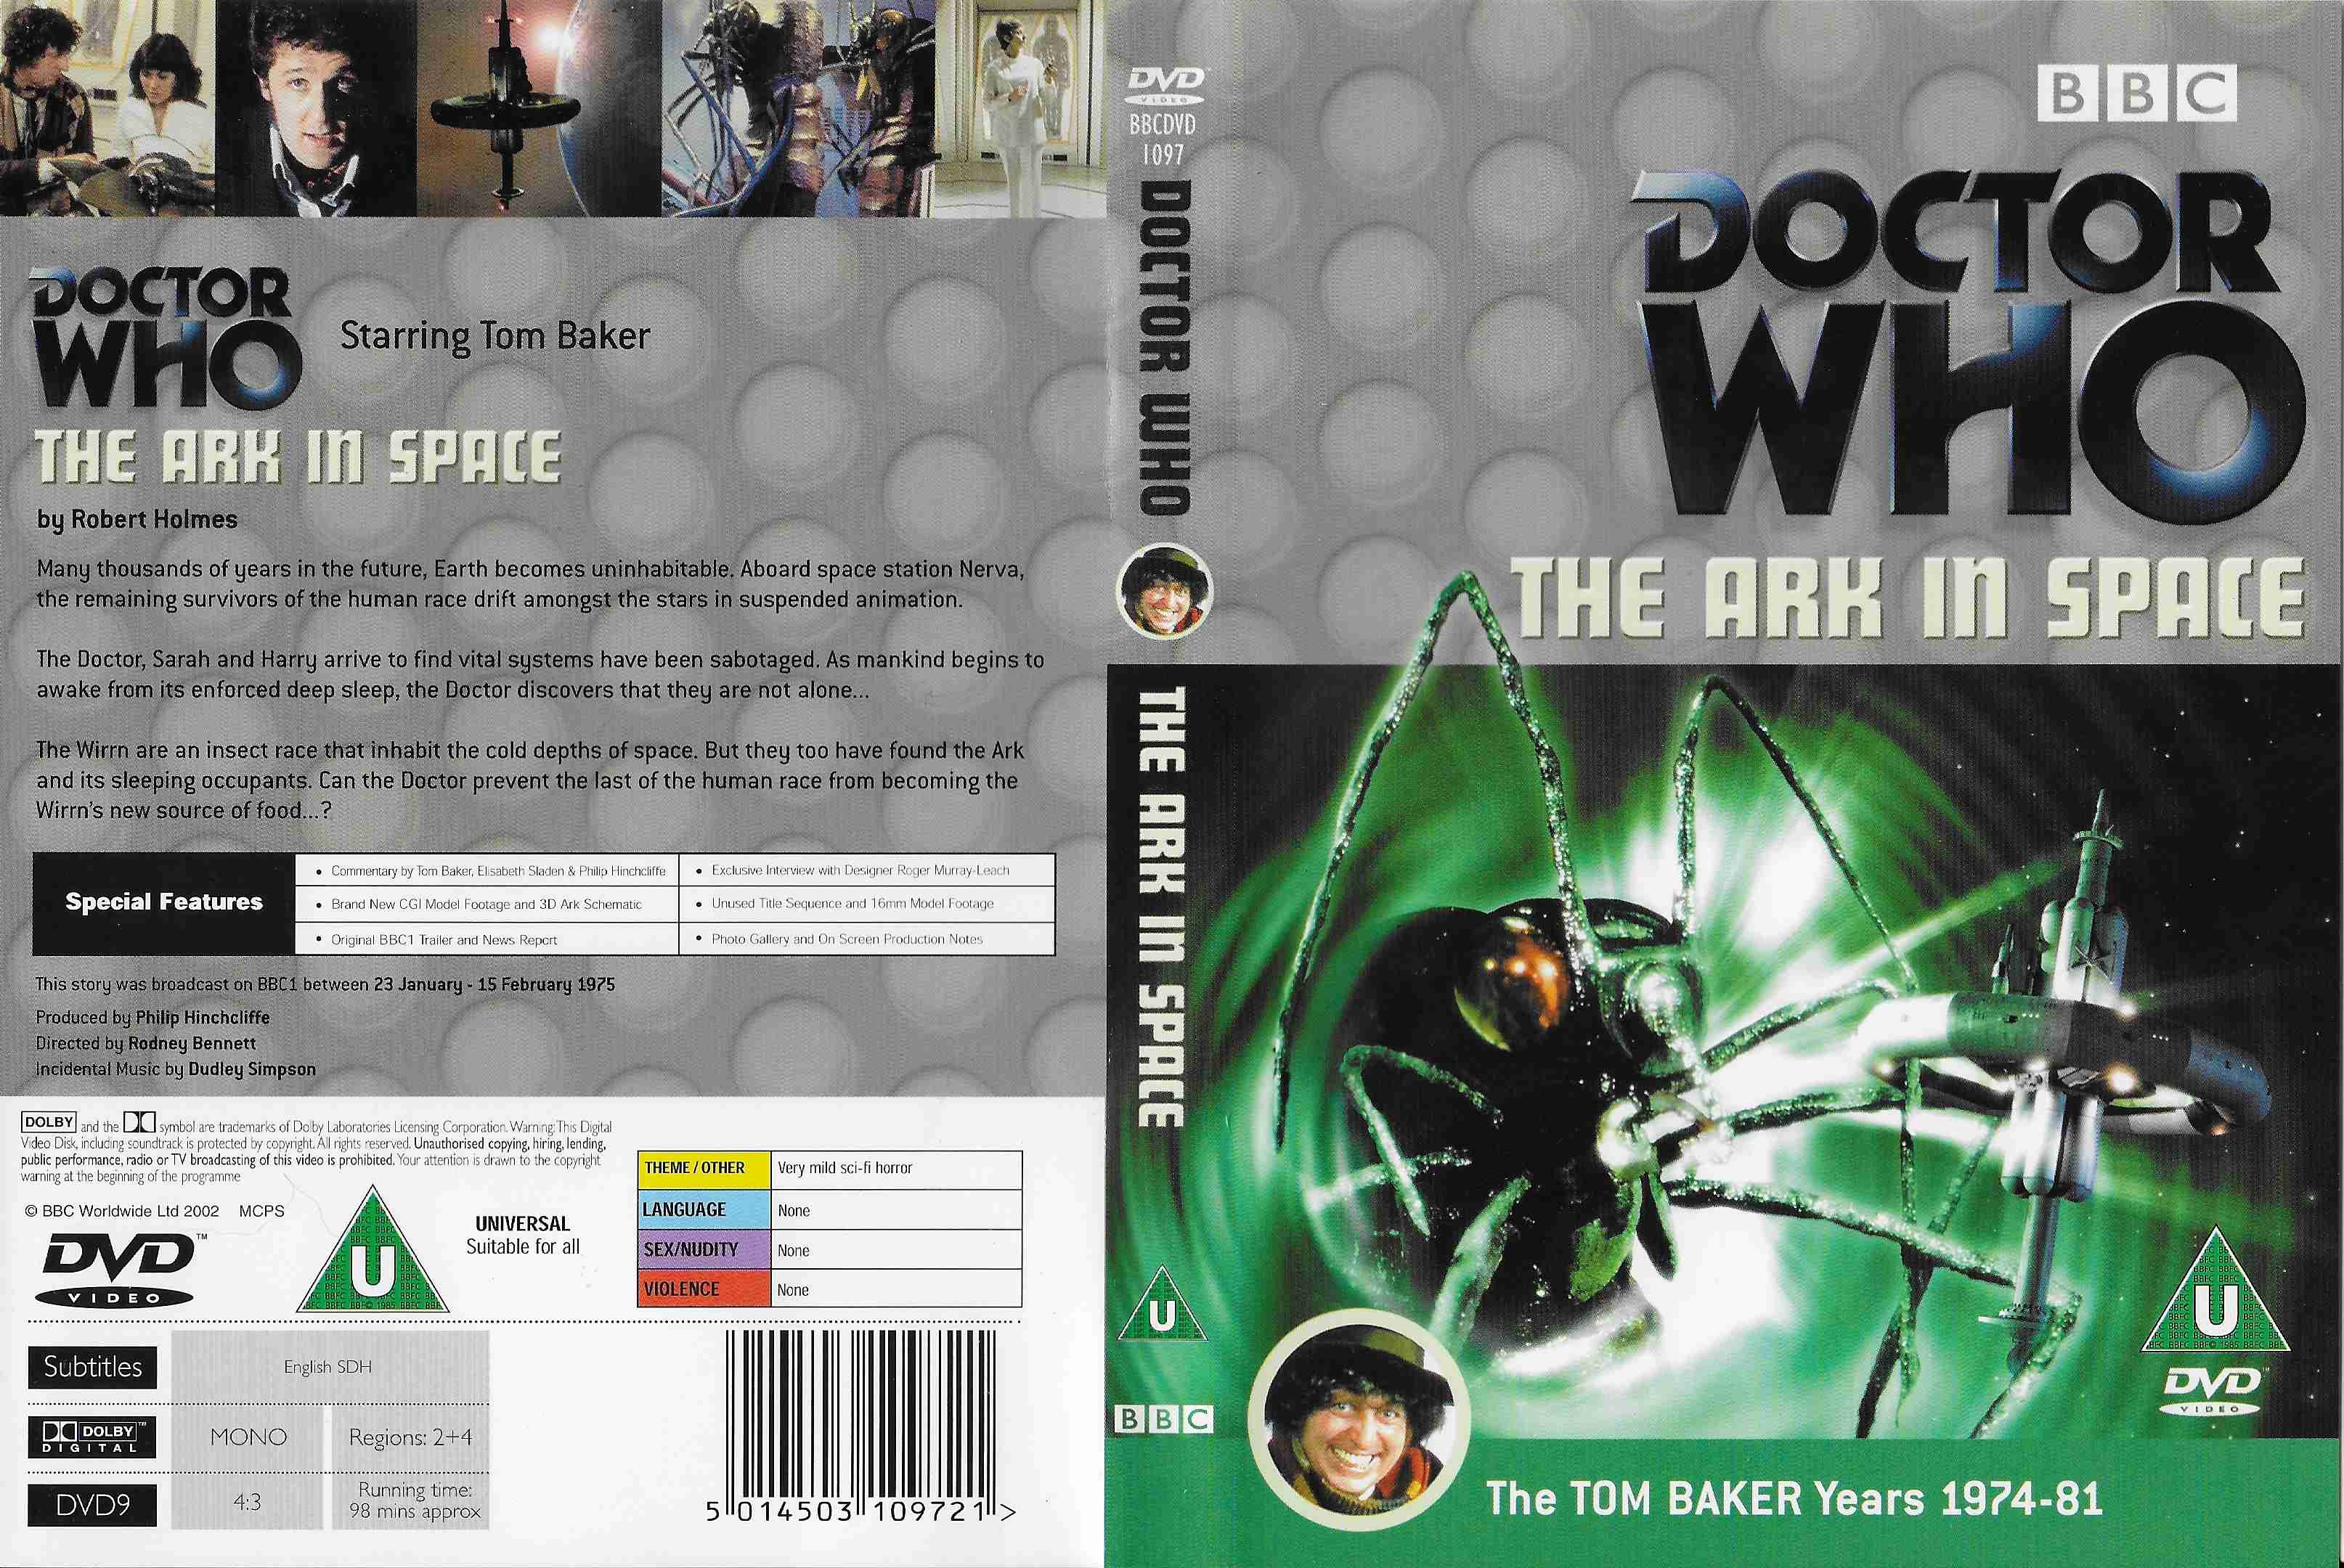 Back cover of BBCDVD 1097